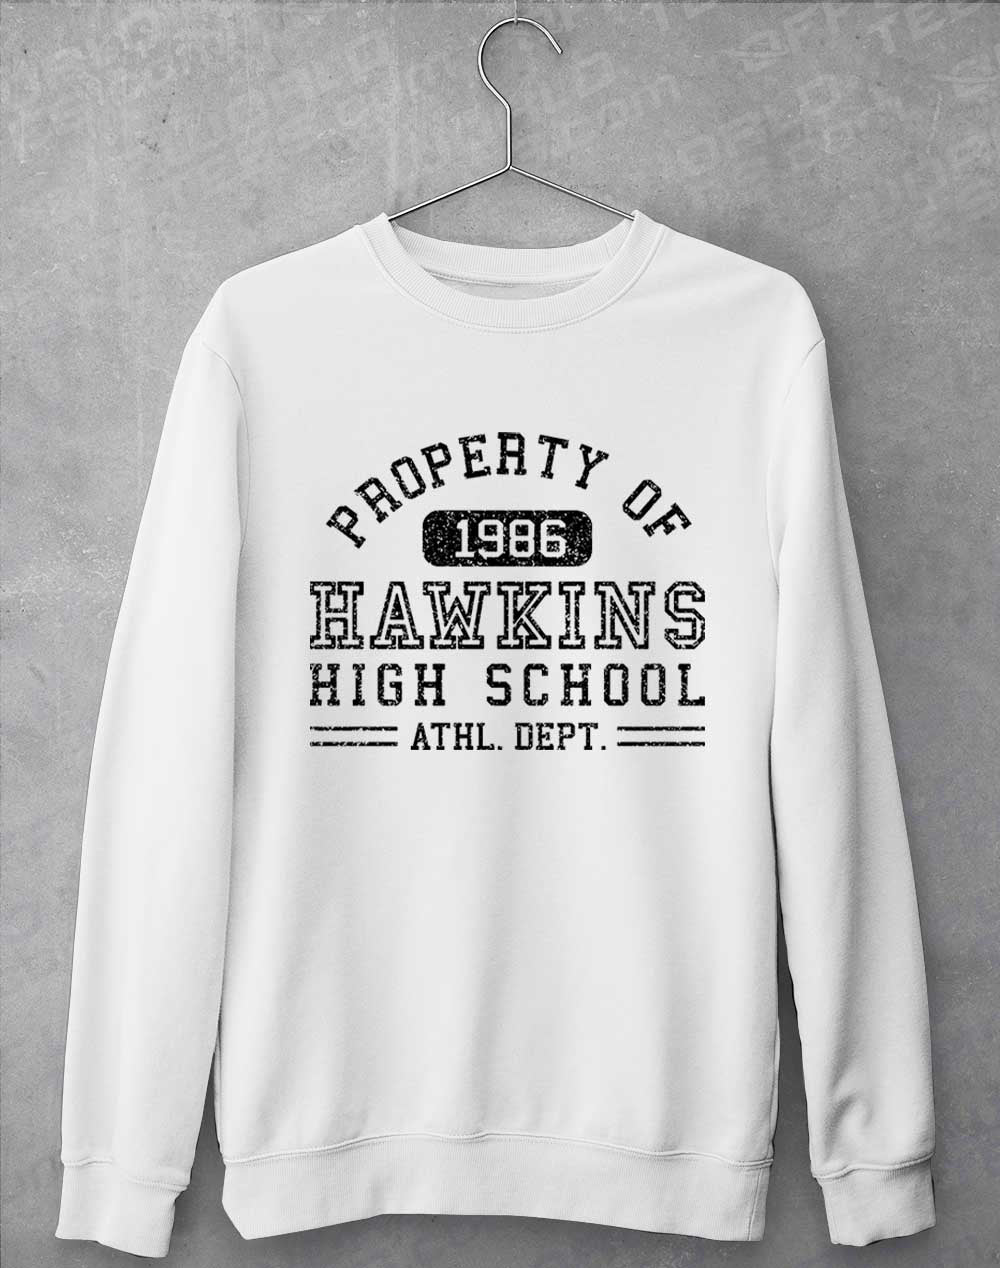 Arctic White - Hawkins High School Athletics 1986 Sweatshirt